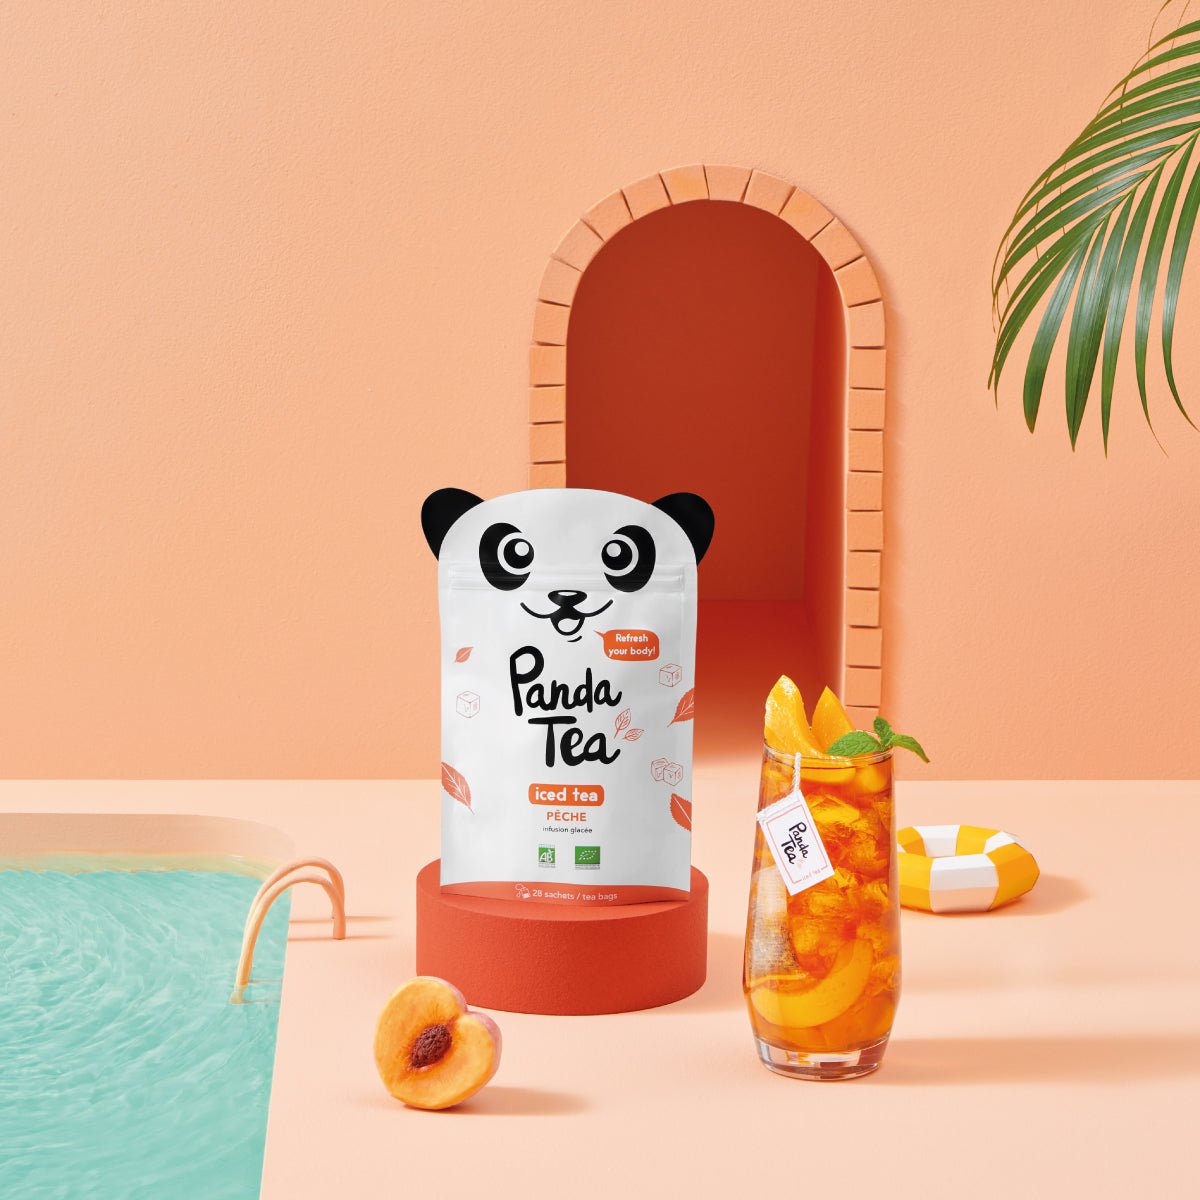 Iced Tea Detox - Thé glacé détox à la pêche - Panda Tea